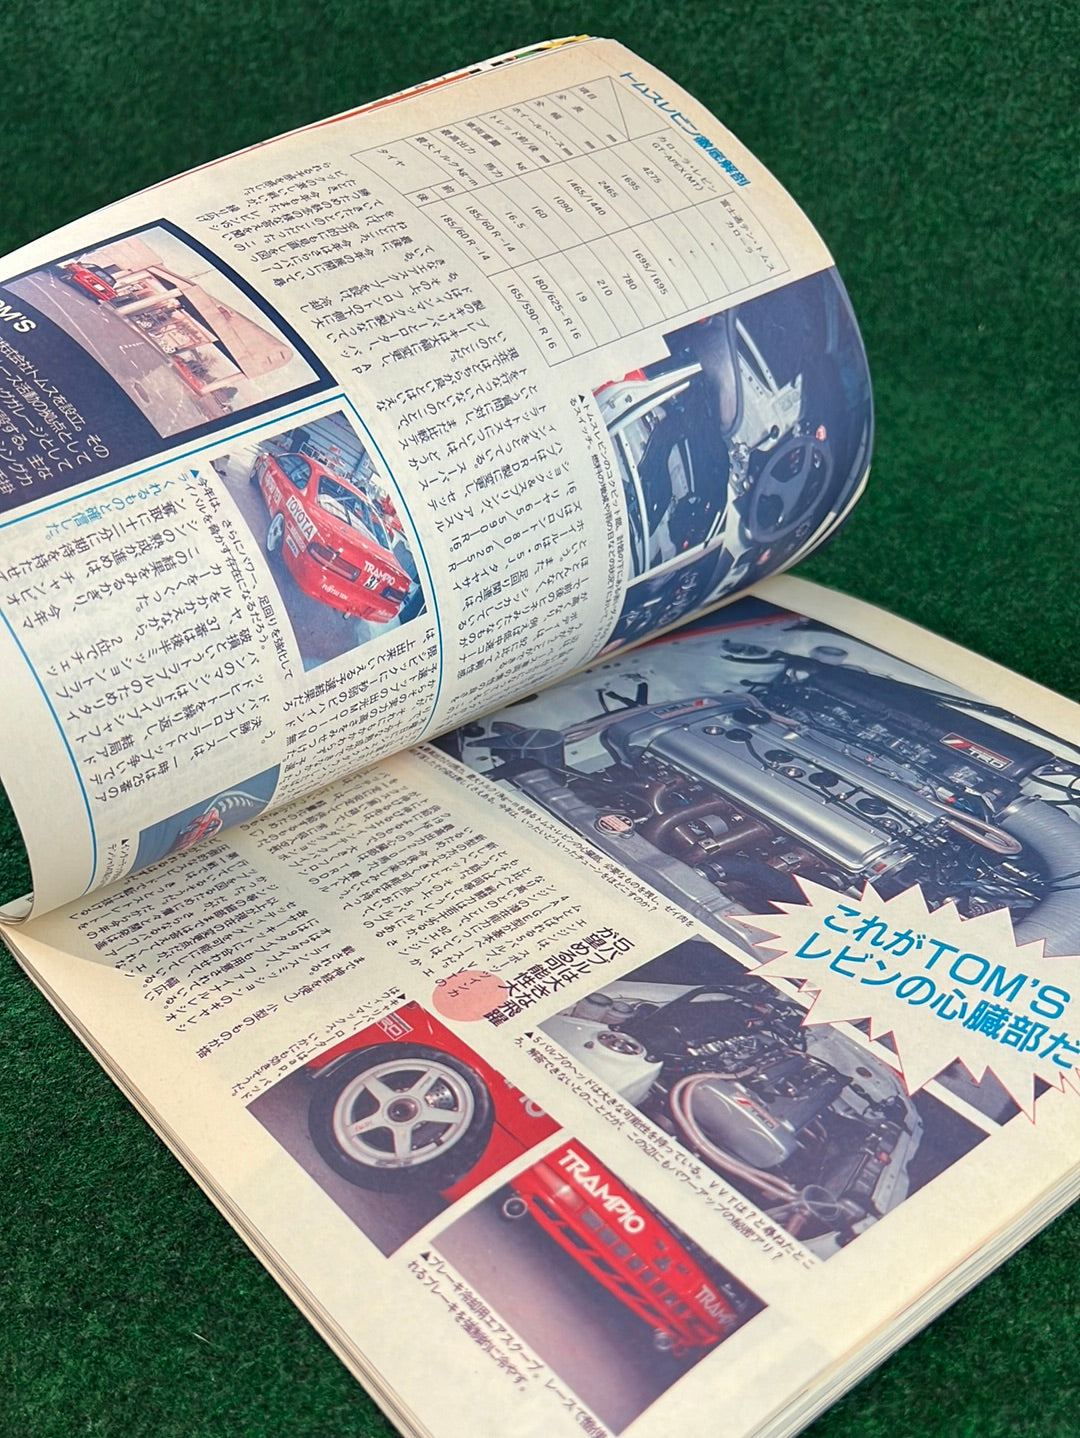 ap - Auto & Parts Magazine - February 1992